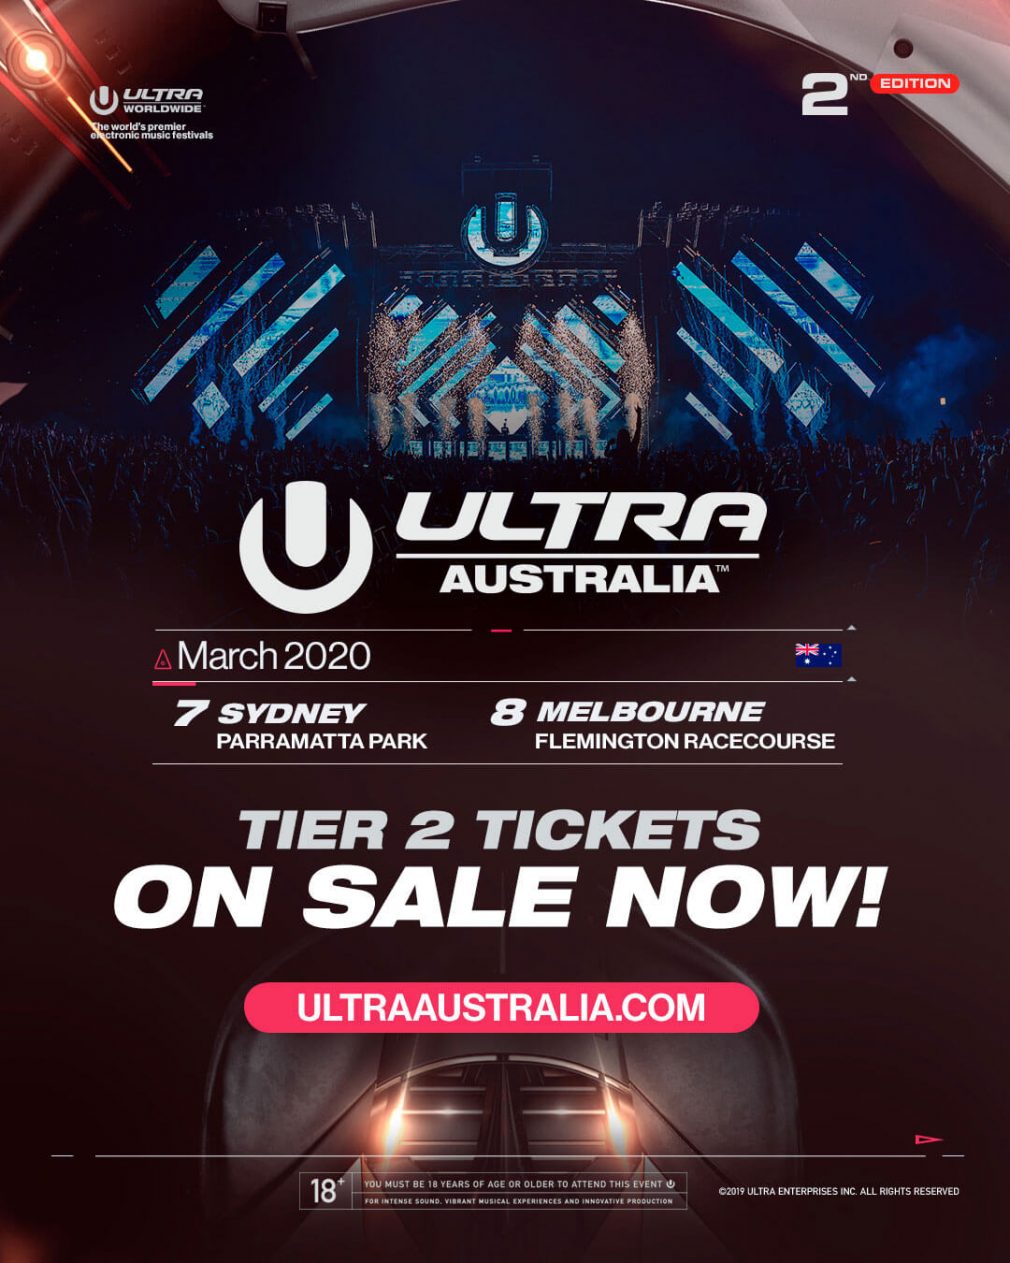 Ultra Sydney Discount Promo Code, Ultra 2020 Discount Tickets, Parramatta Park Sydney, March 2020, Ultra Melbourne 2020 Discount